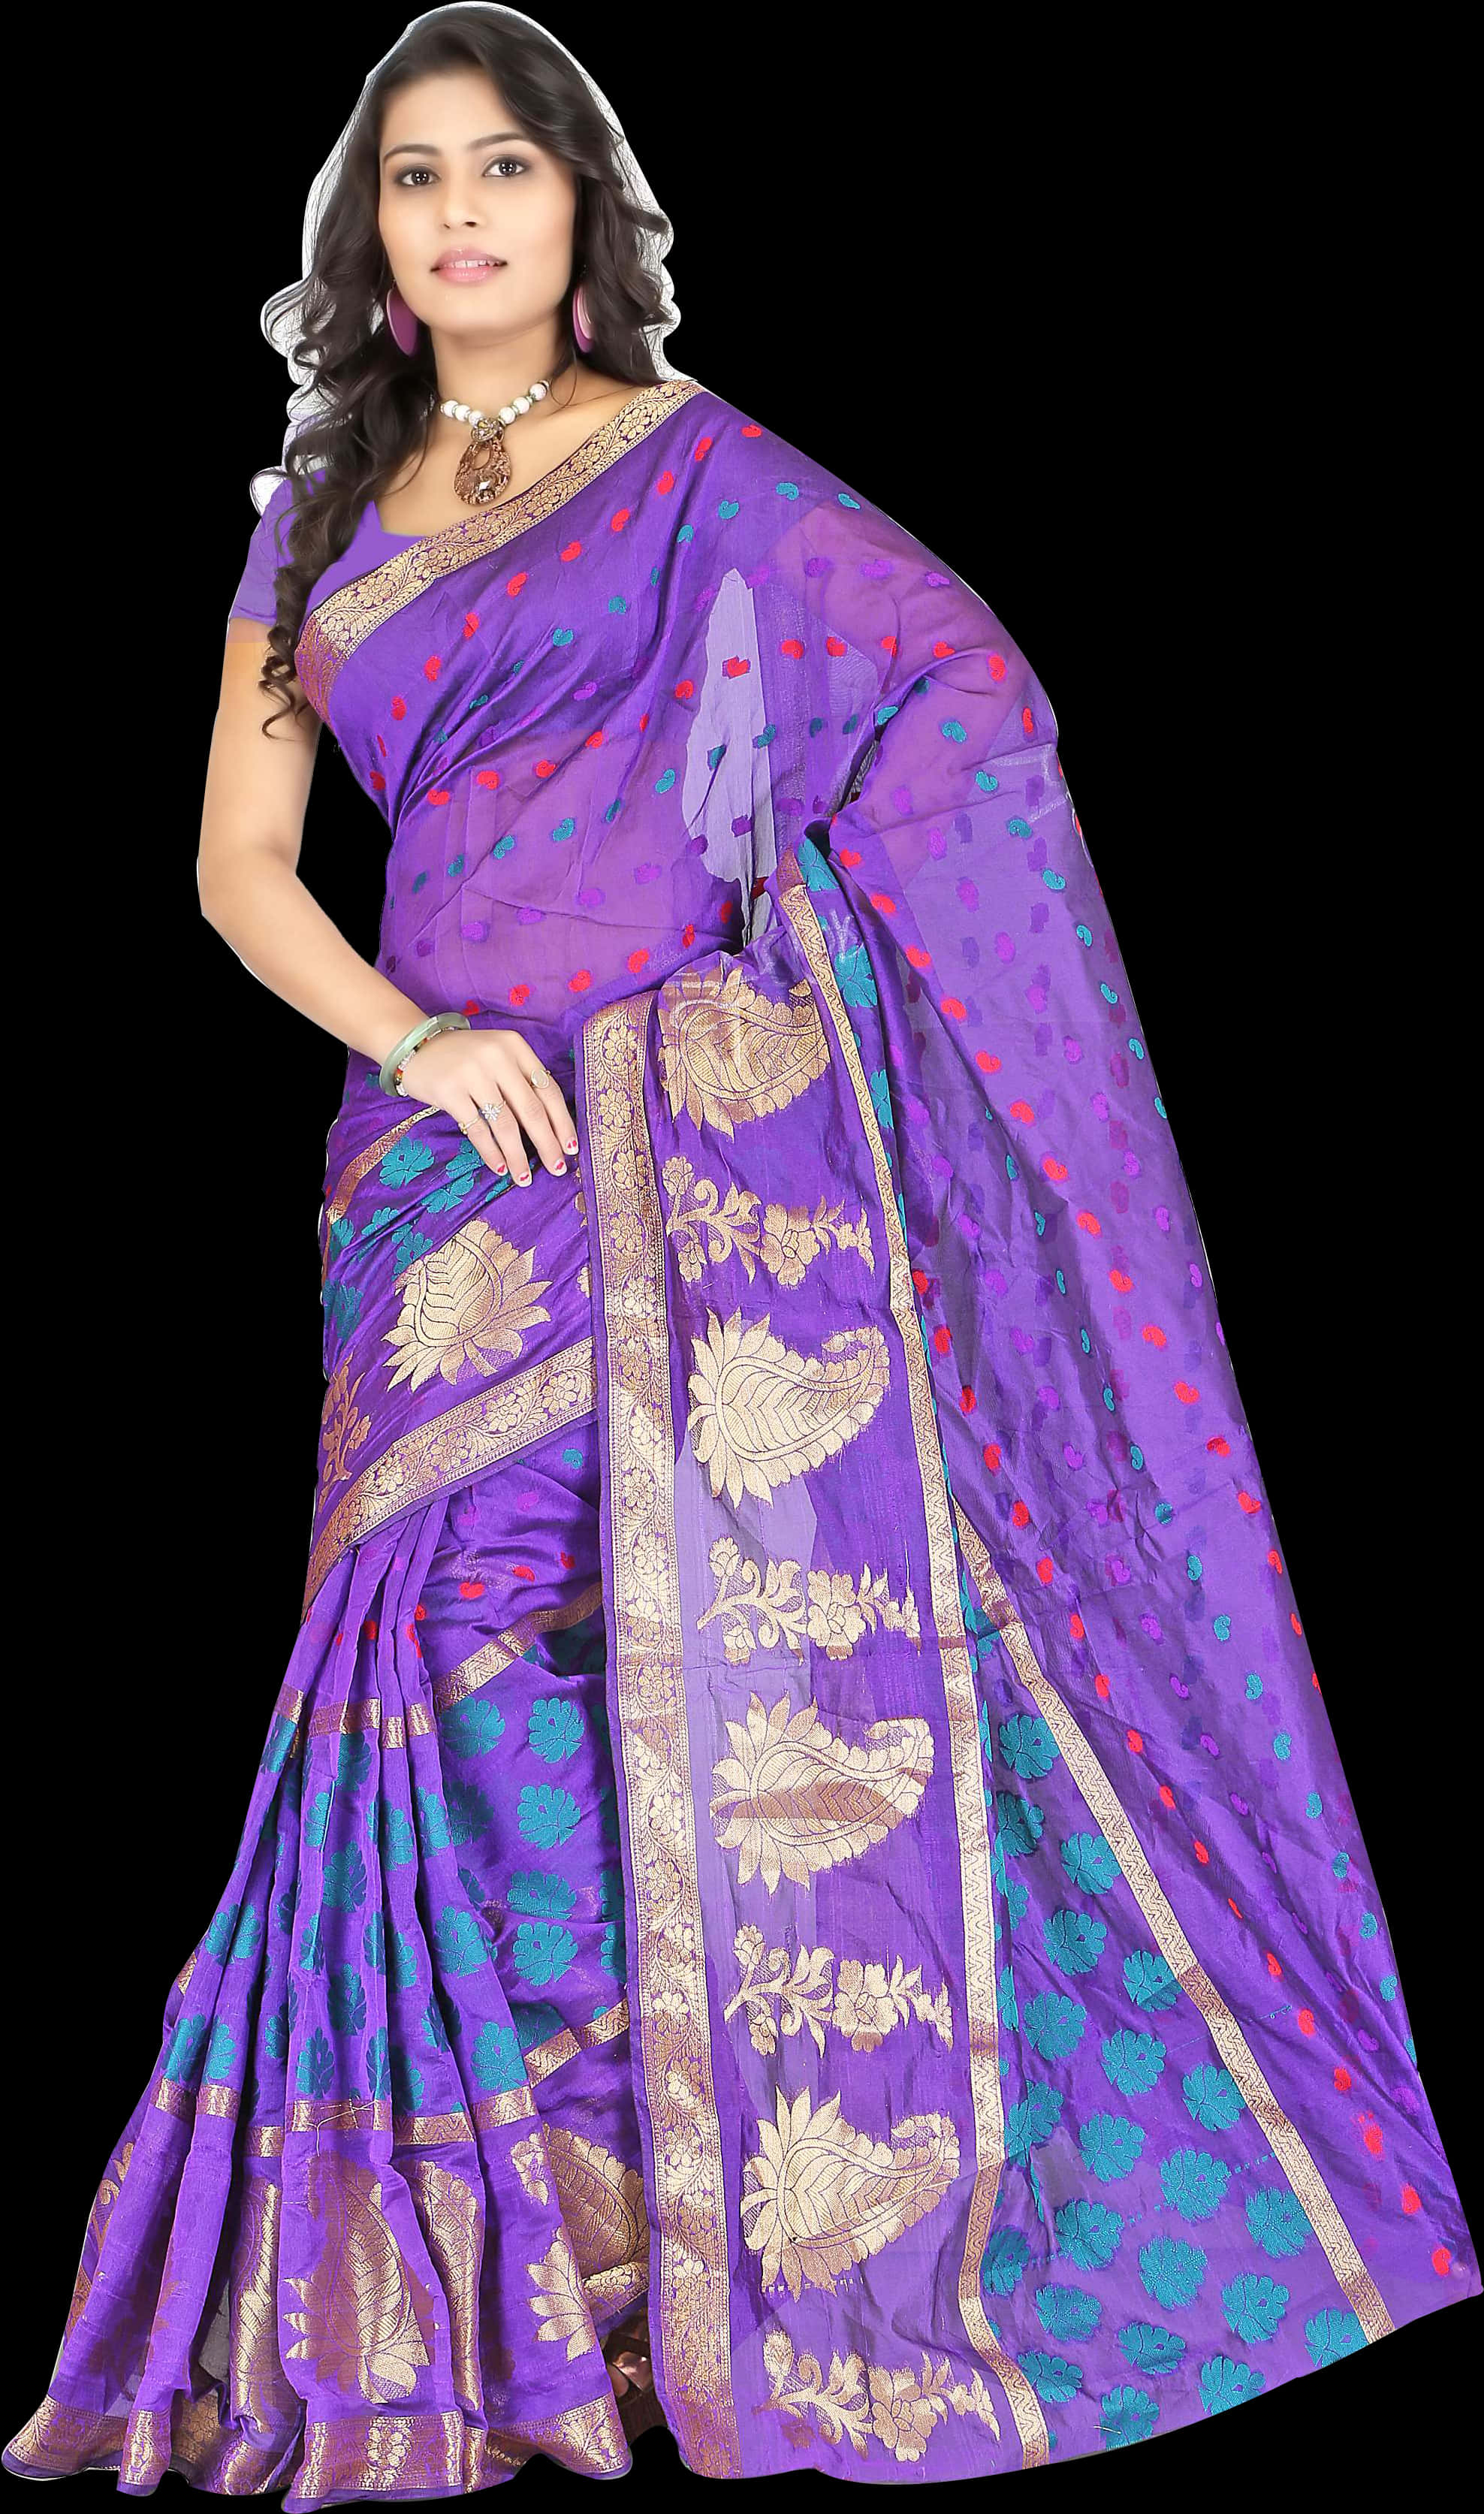 A Woman In A Purple Sari